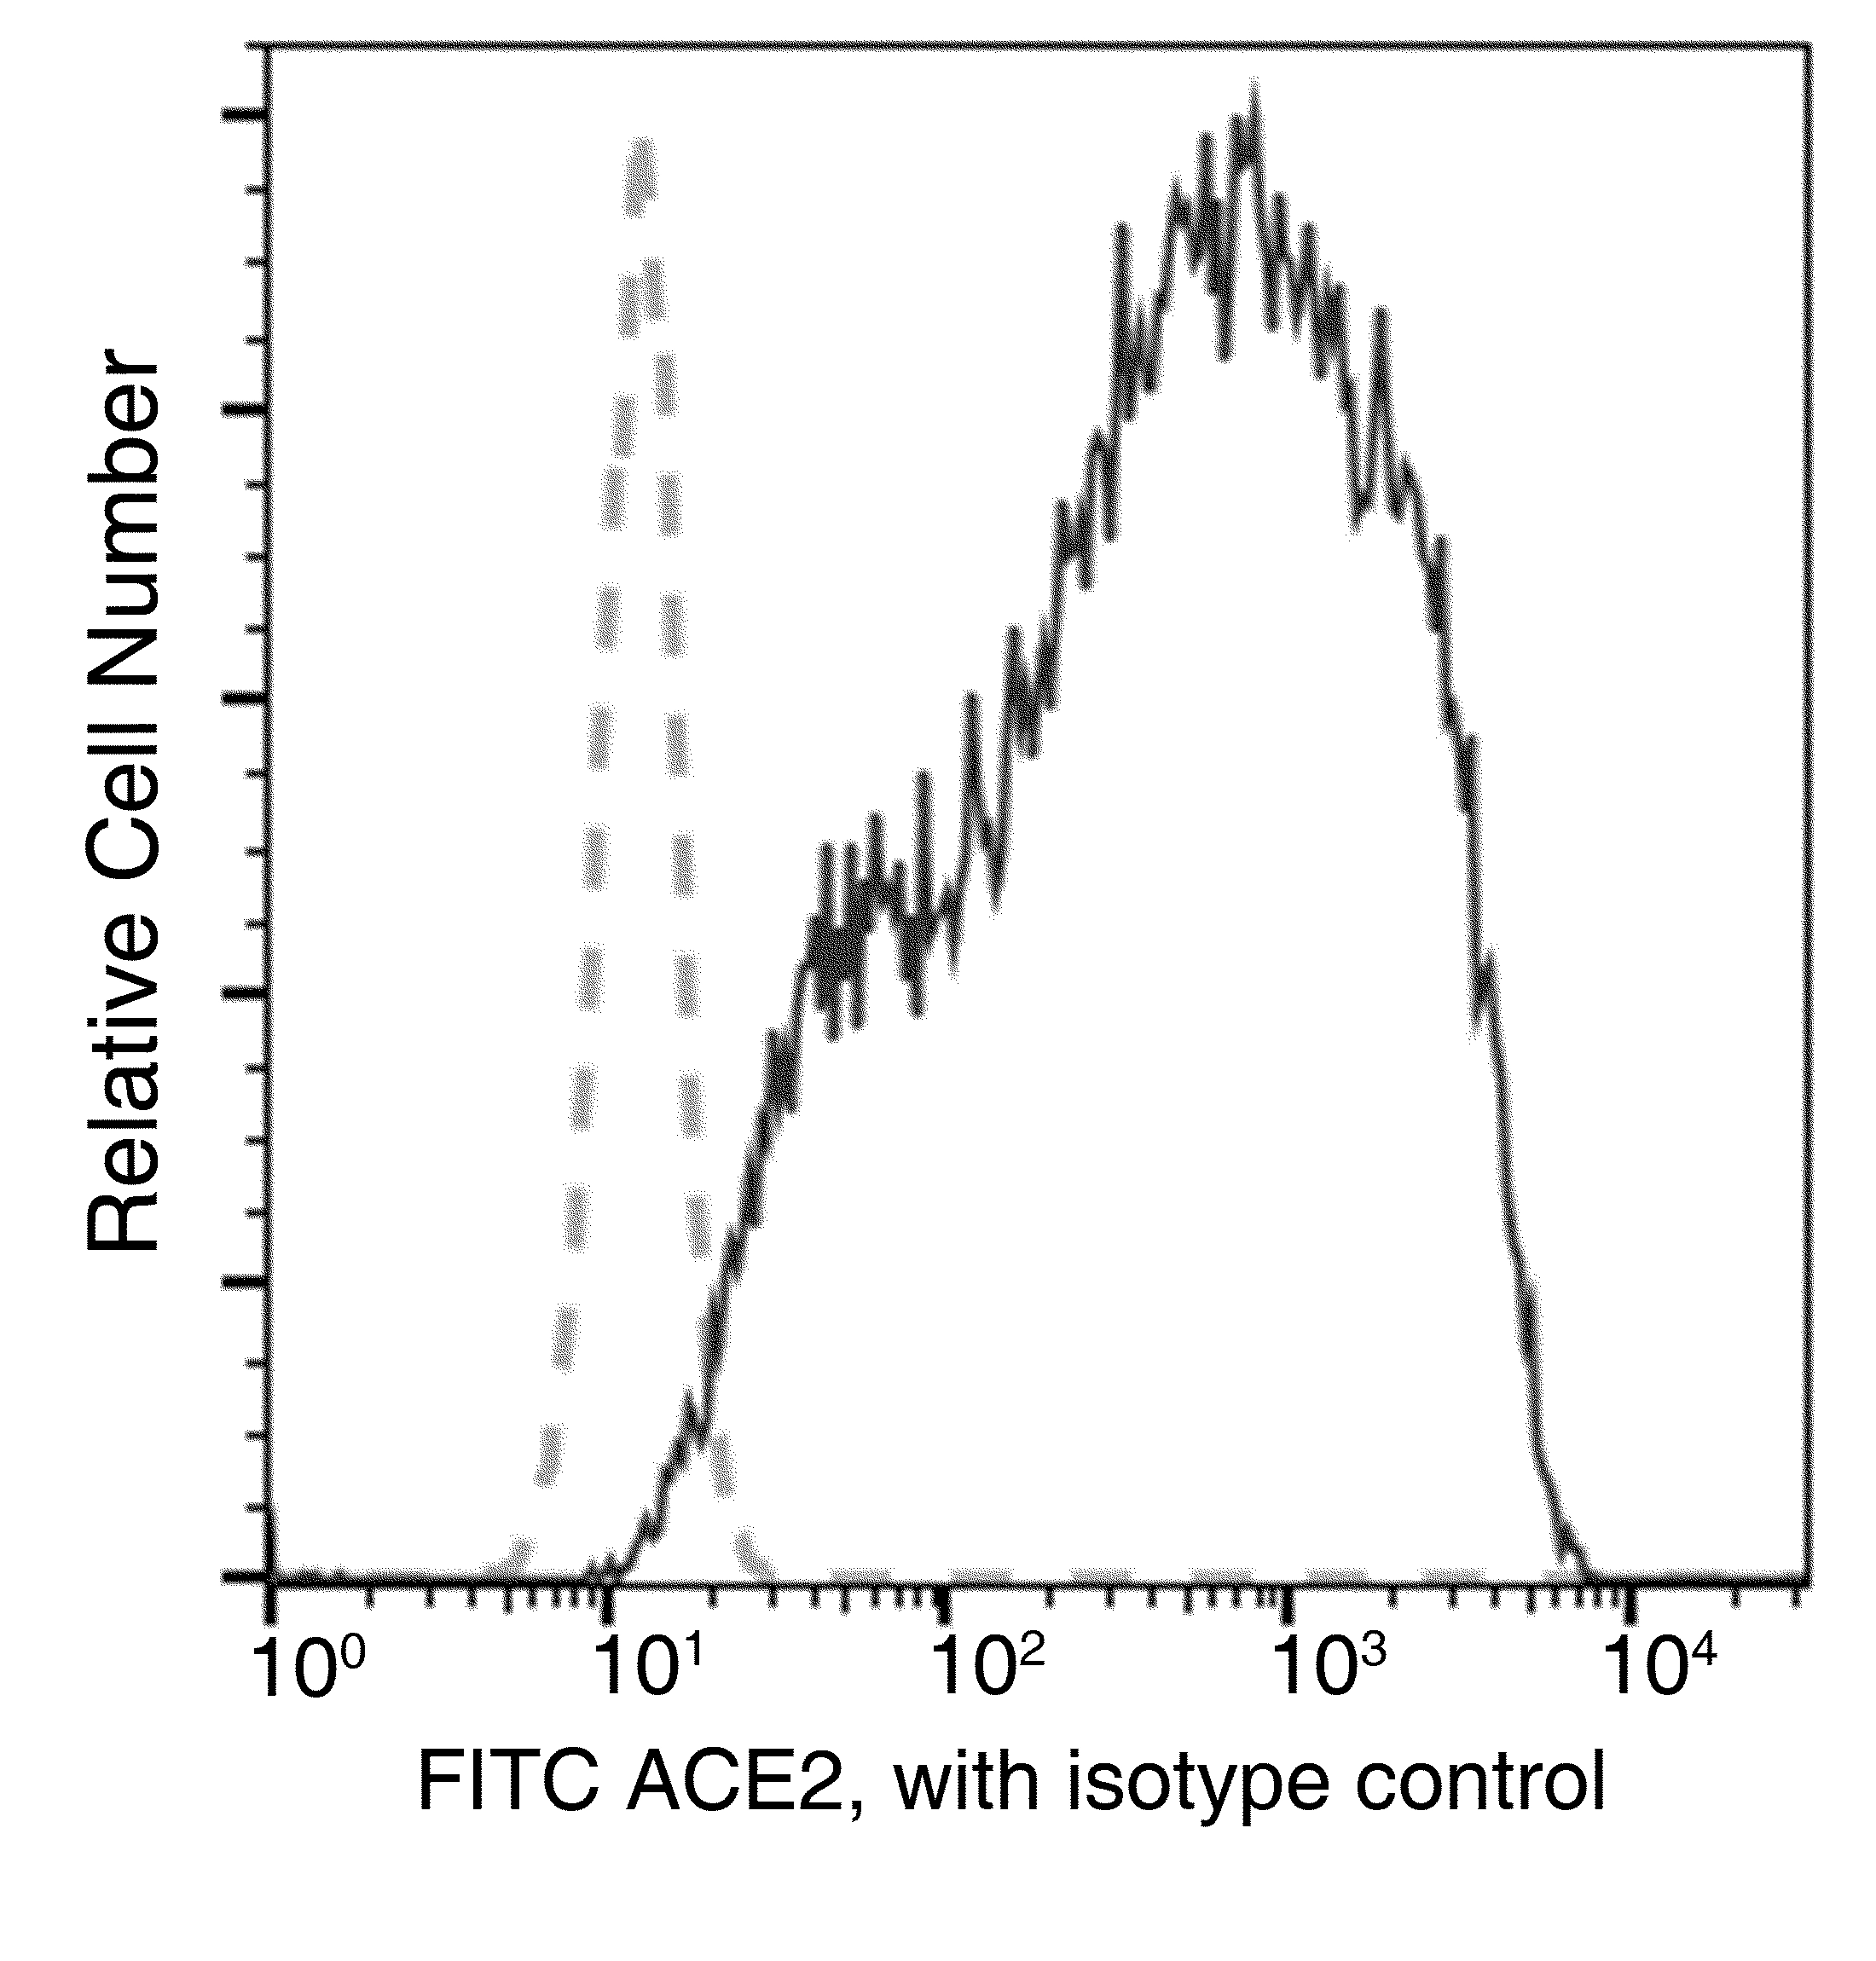 ACE2 Antibody (FITC), Mouse MAb